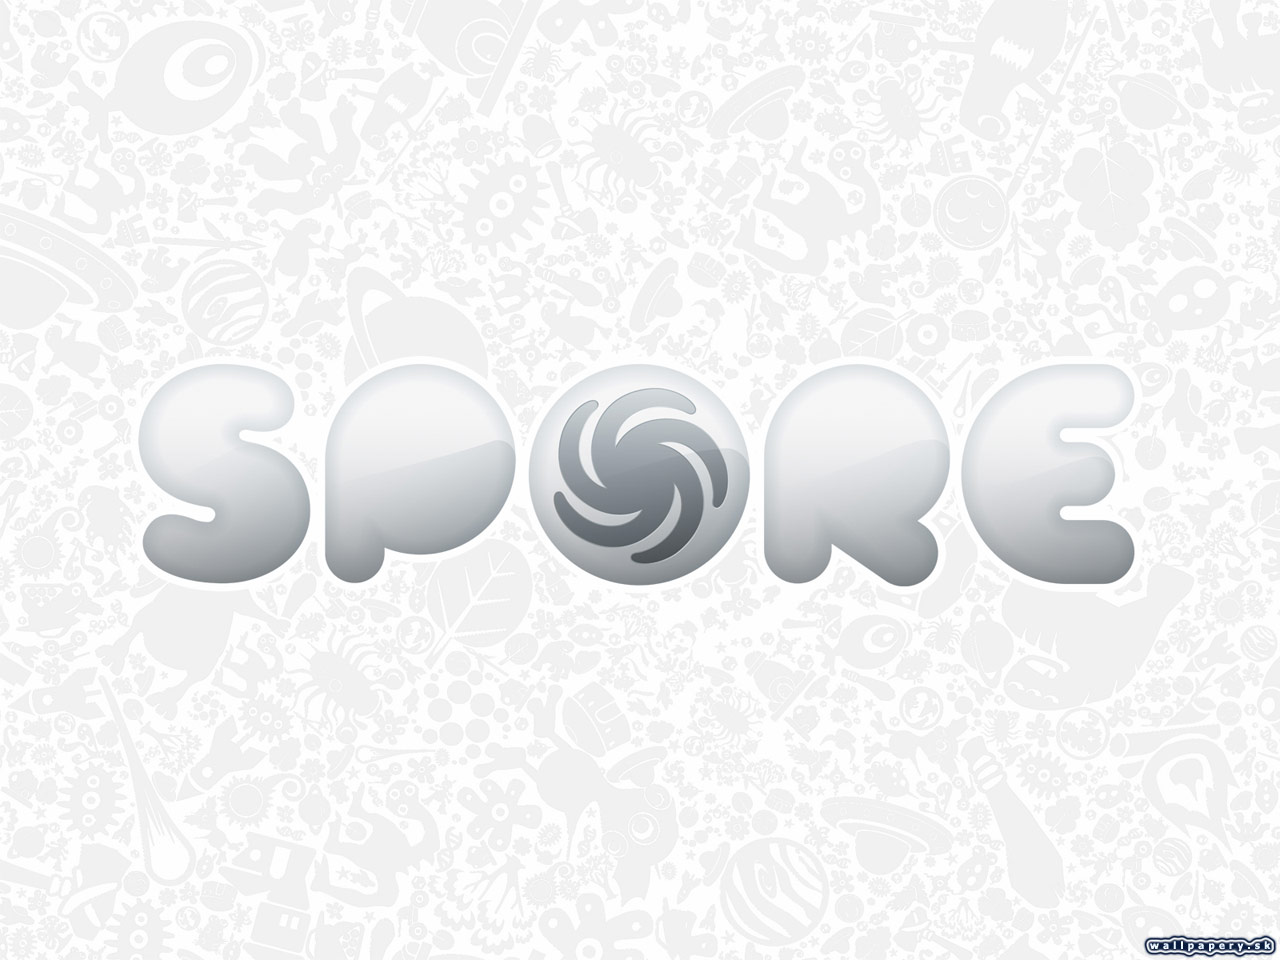 Spore - wallpaper 12